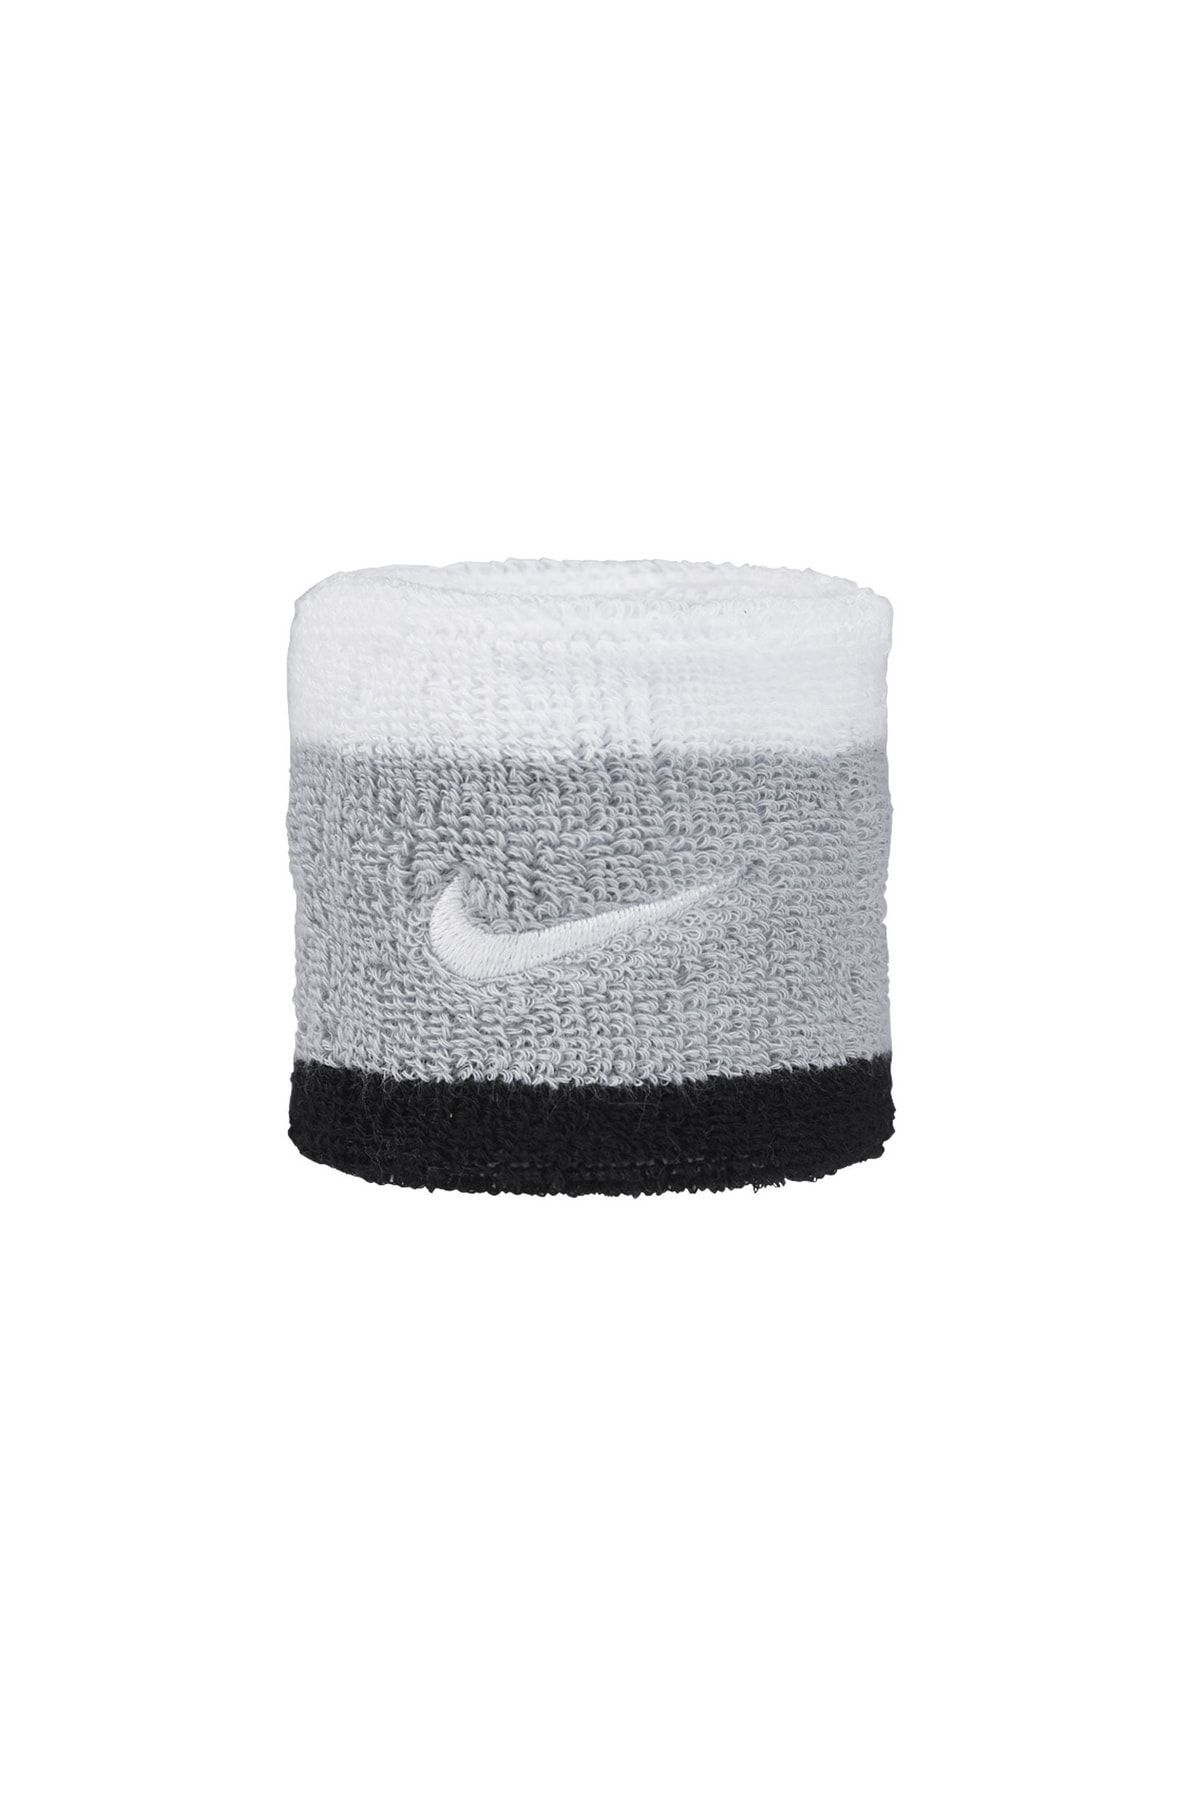 Nike Swoosh Wristbands Havlu El Bilekliği